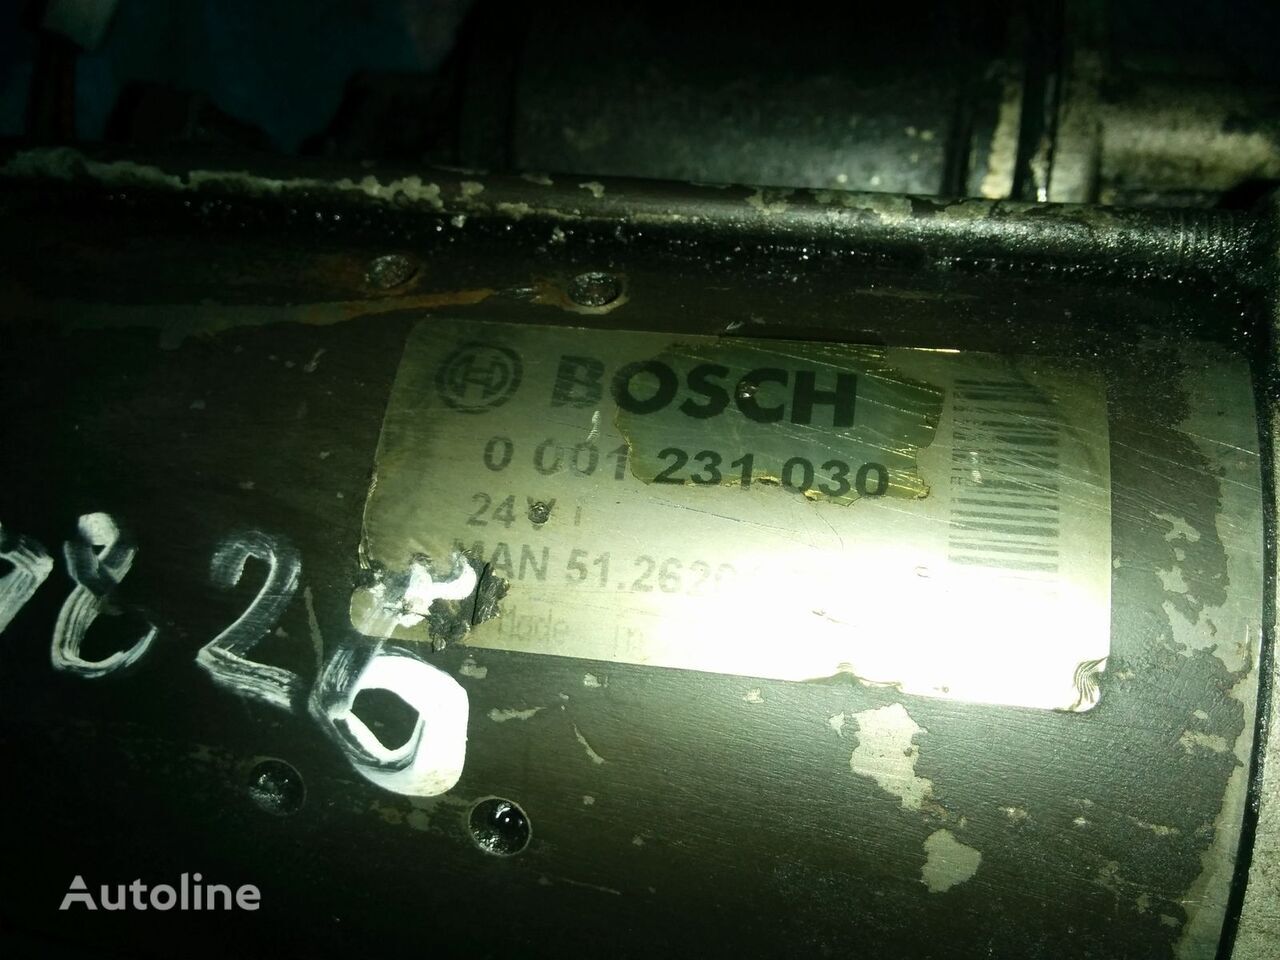 Лизинг на  Bosch 0001231-030 / 51.262017213   MAN 0826 Bosch 0001231-030 / 51.262017213   MAN 0826: снимка 4